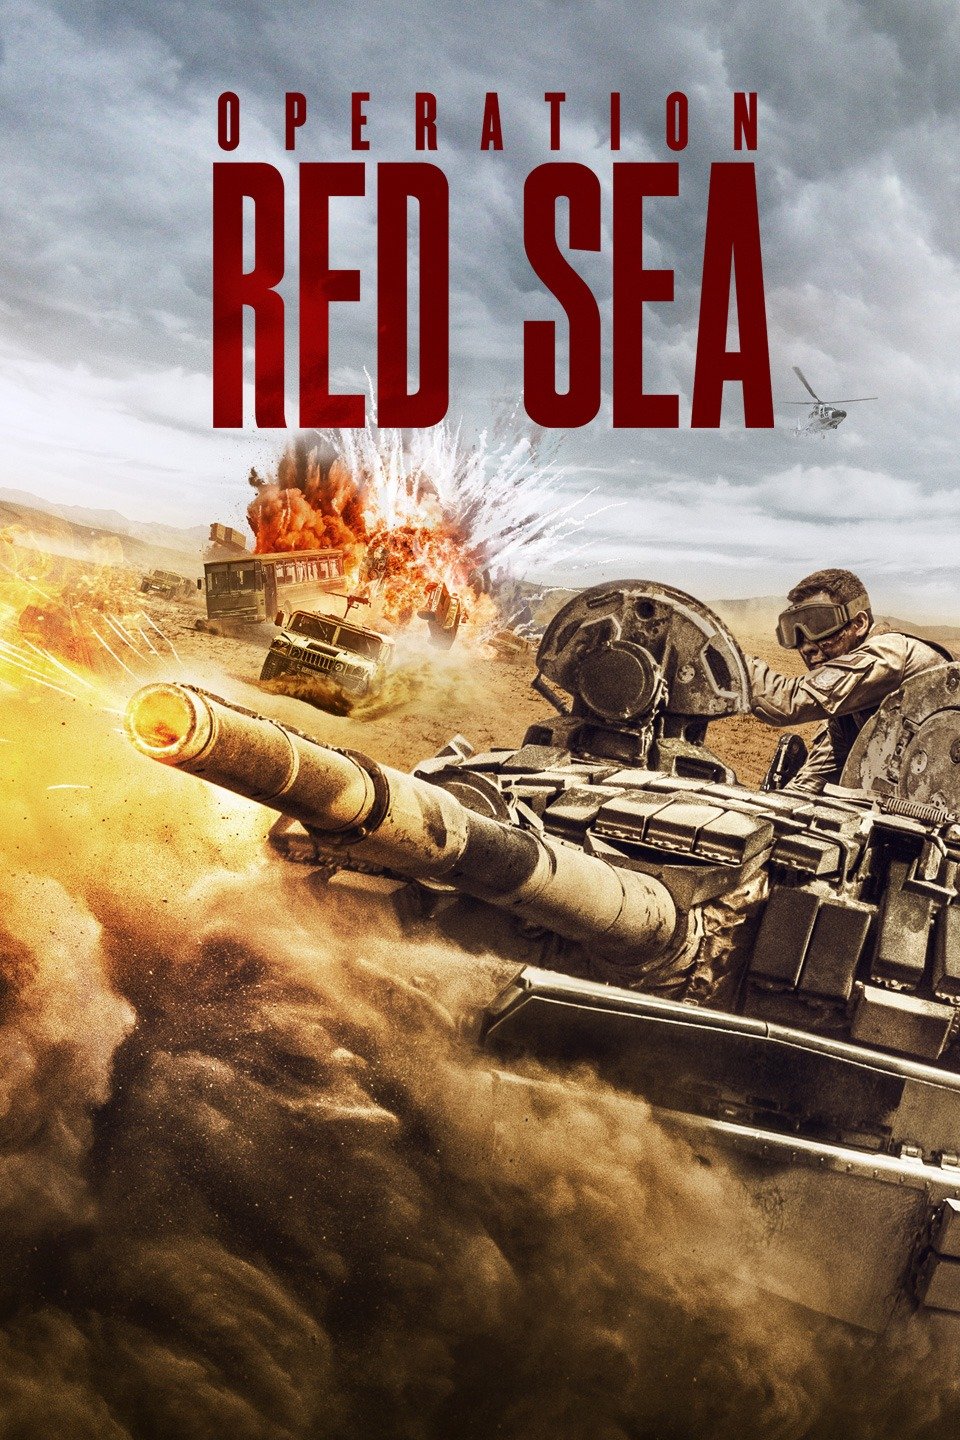 [MINI Super-HQ] Operation Red Sea (2018) ยุทธภูมิทะเลแดง [1080p] [พากย์ไทย 5.1 + เสียงจีน DTS] [บรรยายไทย + อังกฤษ] [เสียงไทย + ซับไทย]